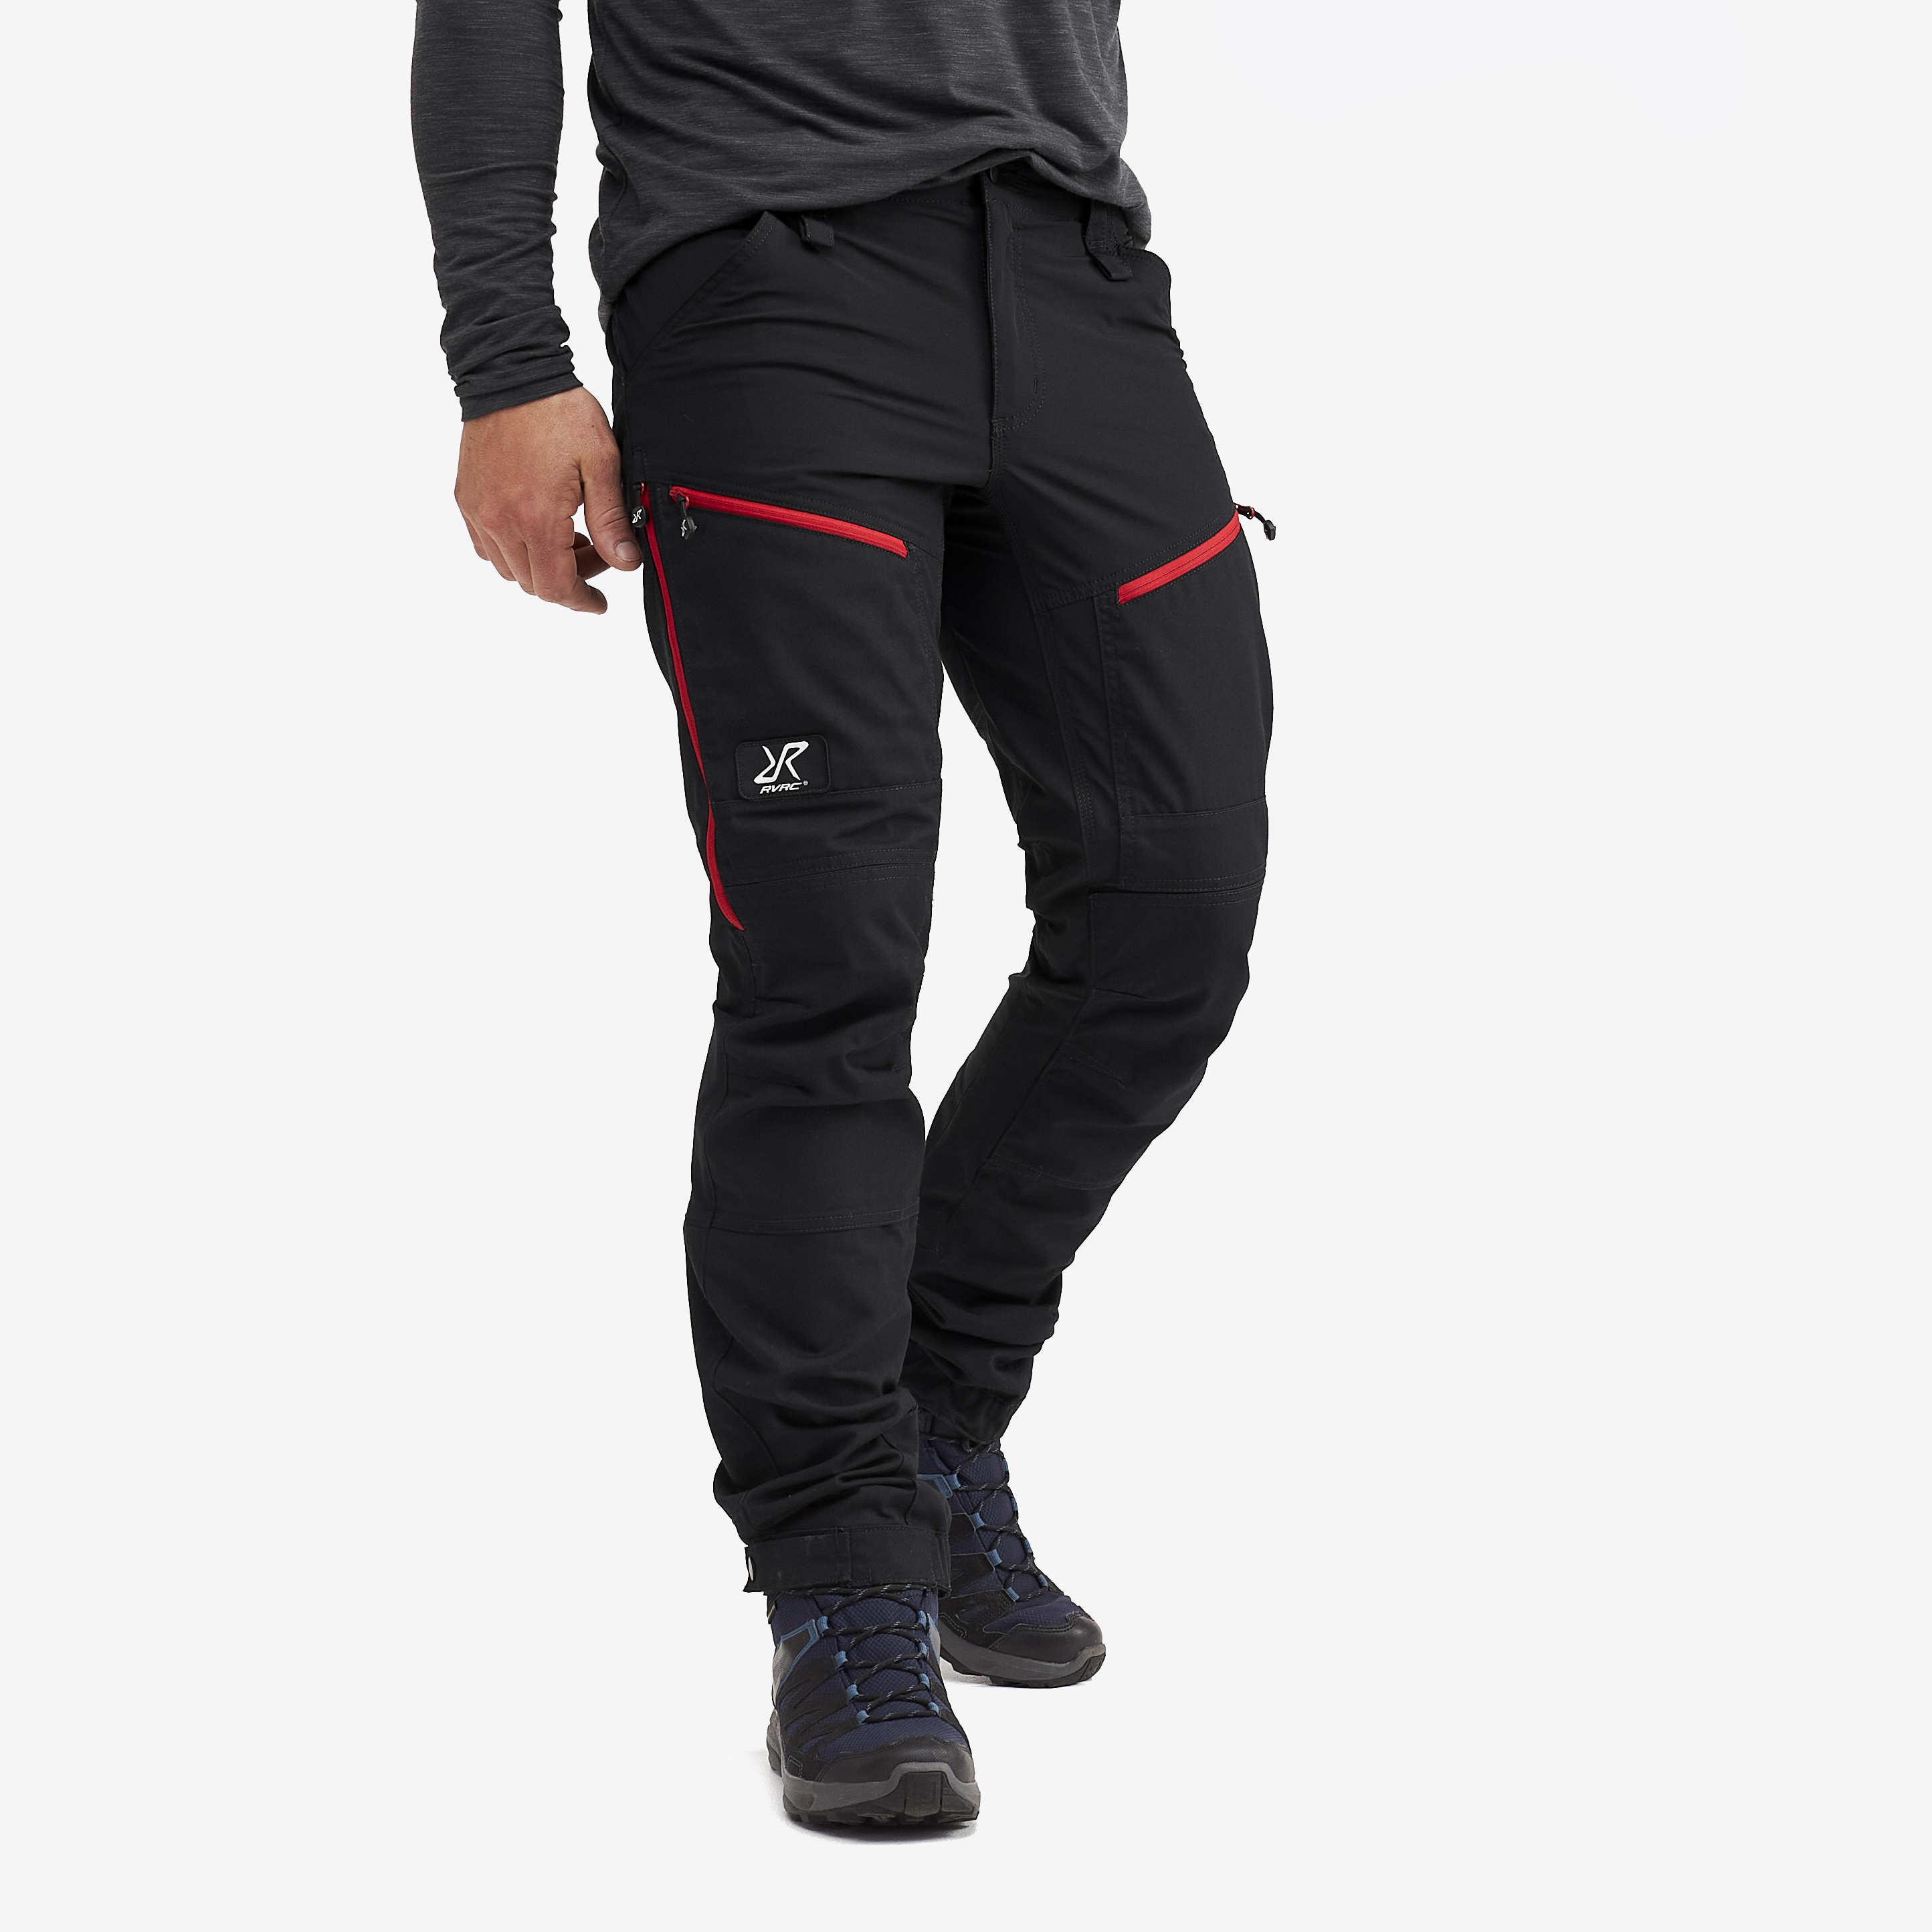 RVRC GP Pro Pants Black/Red Men